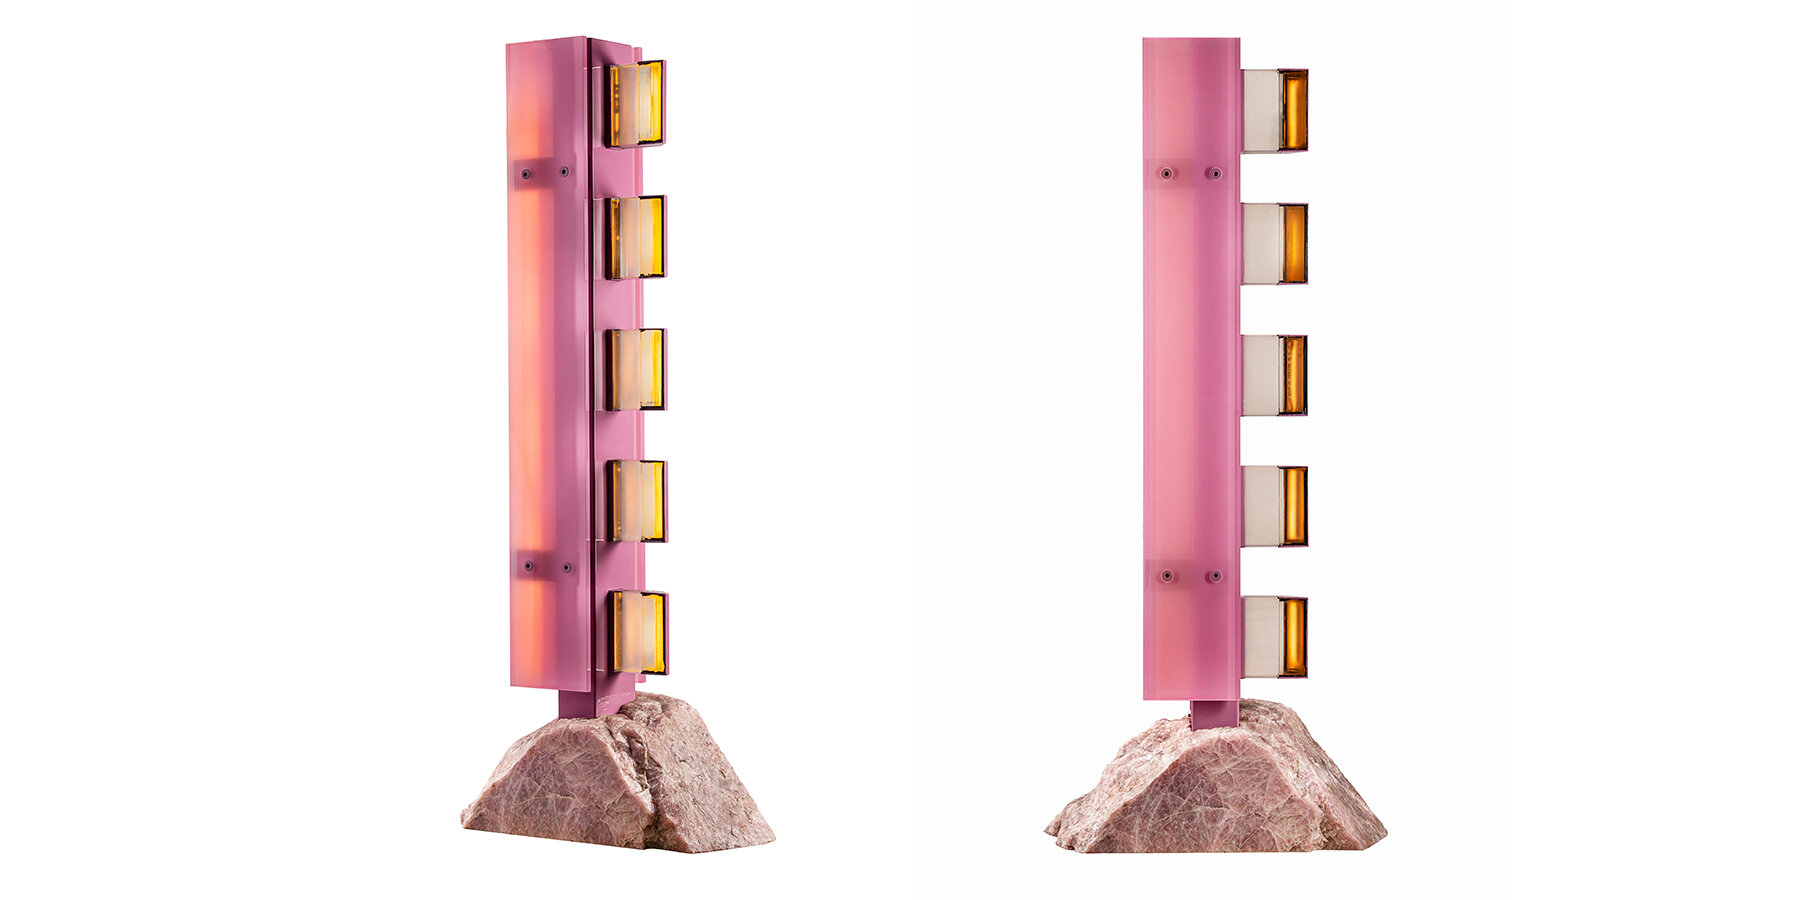 enrico marone cinzano’s rosa tank lamp at design miami/ basel